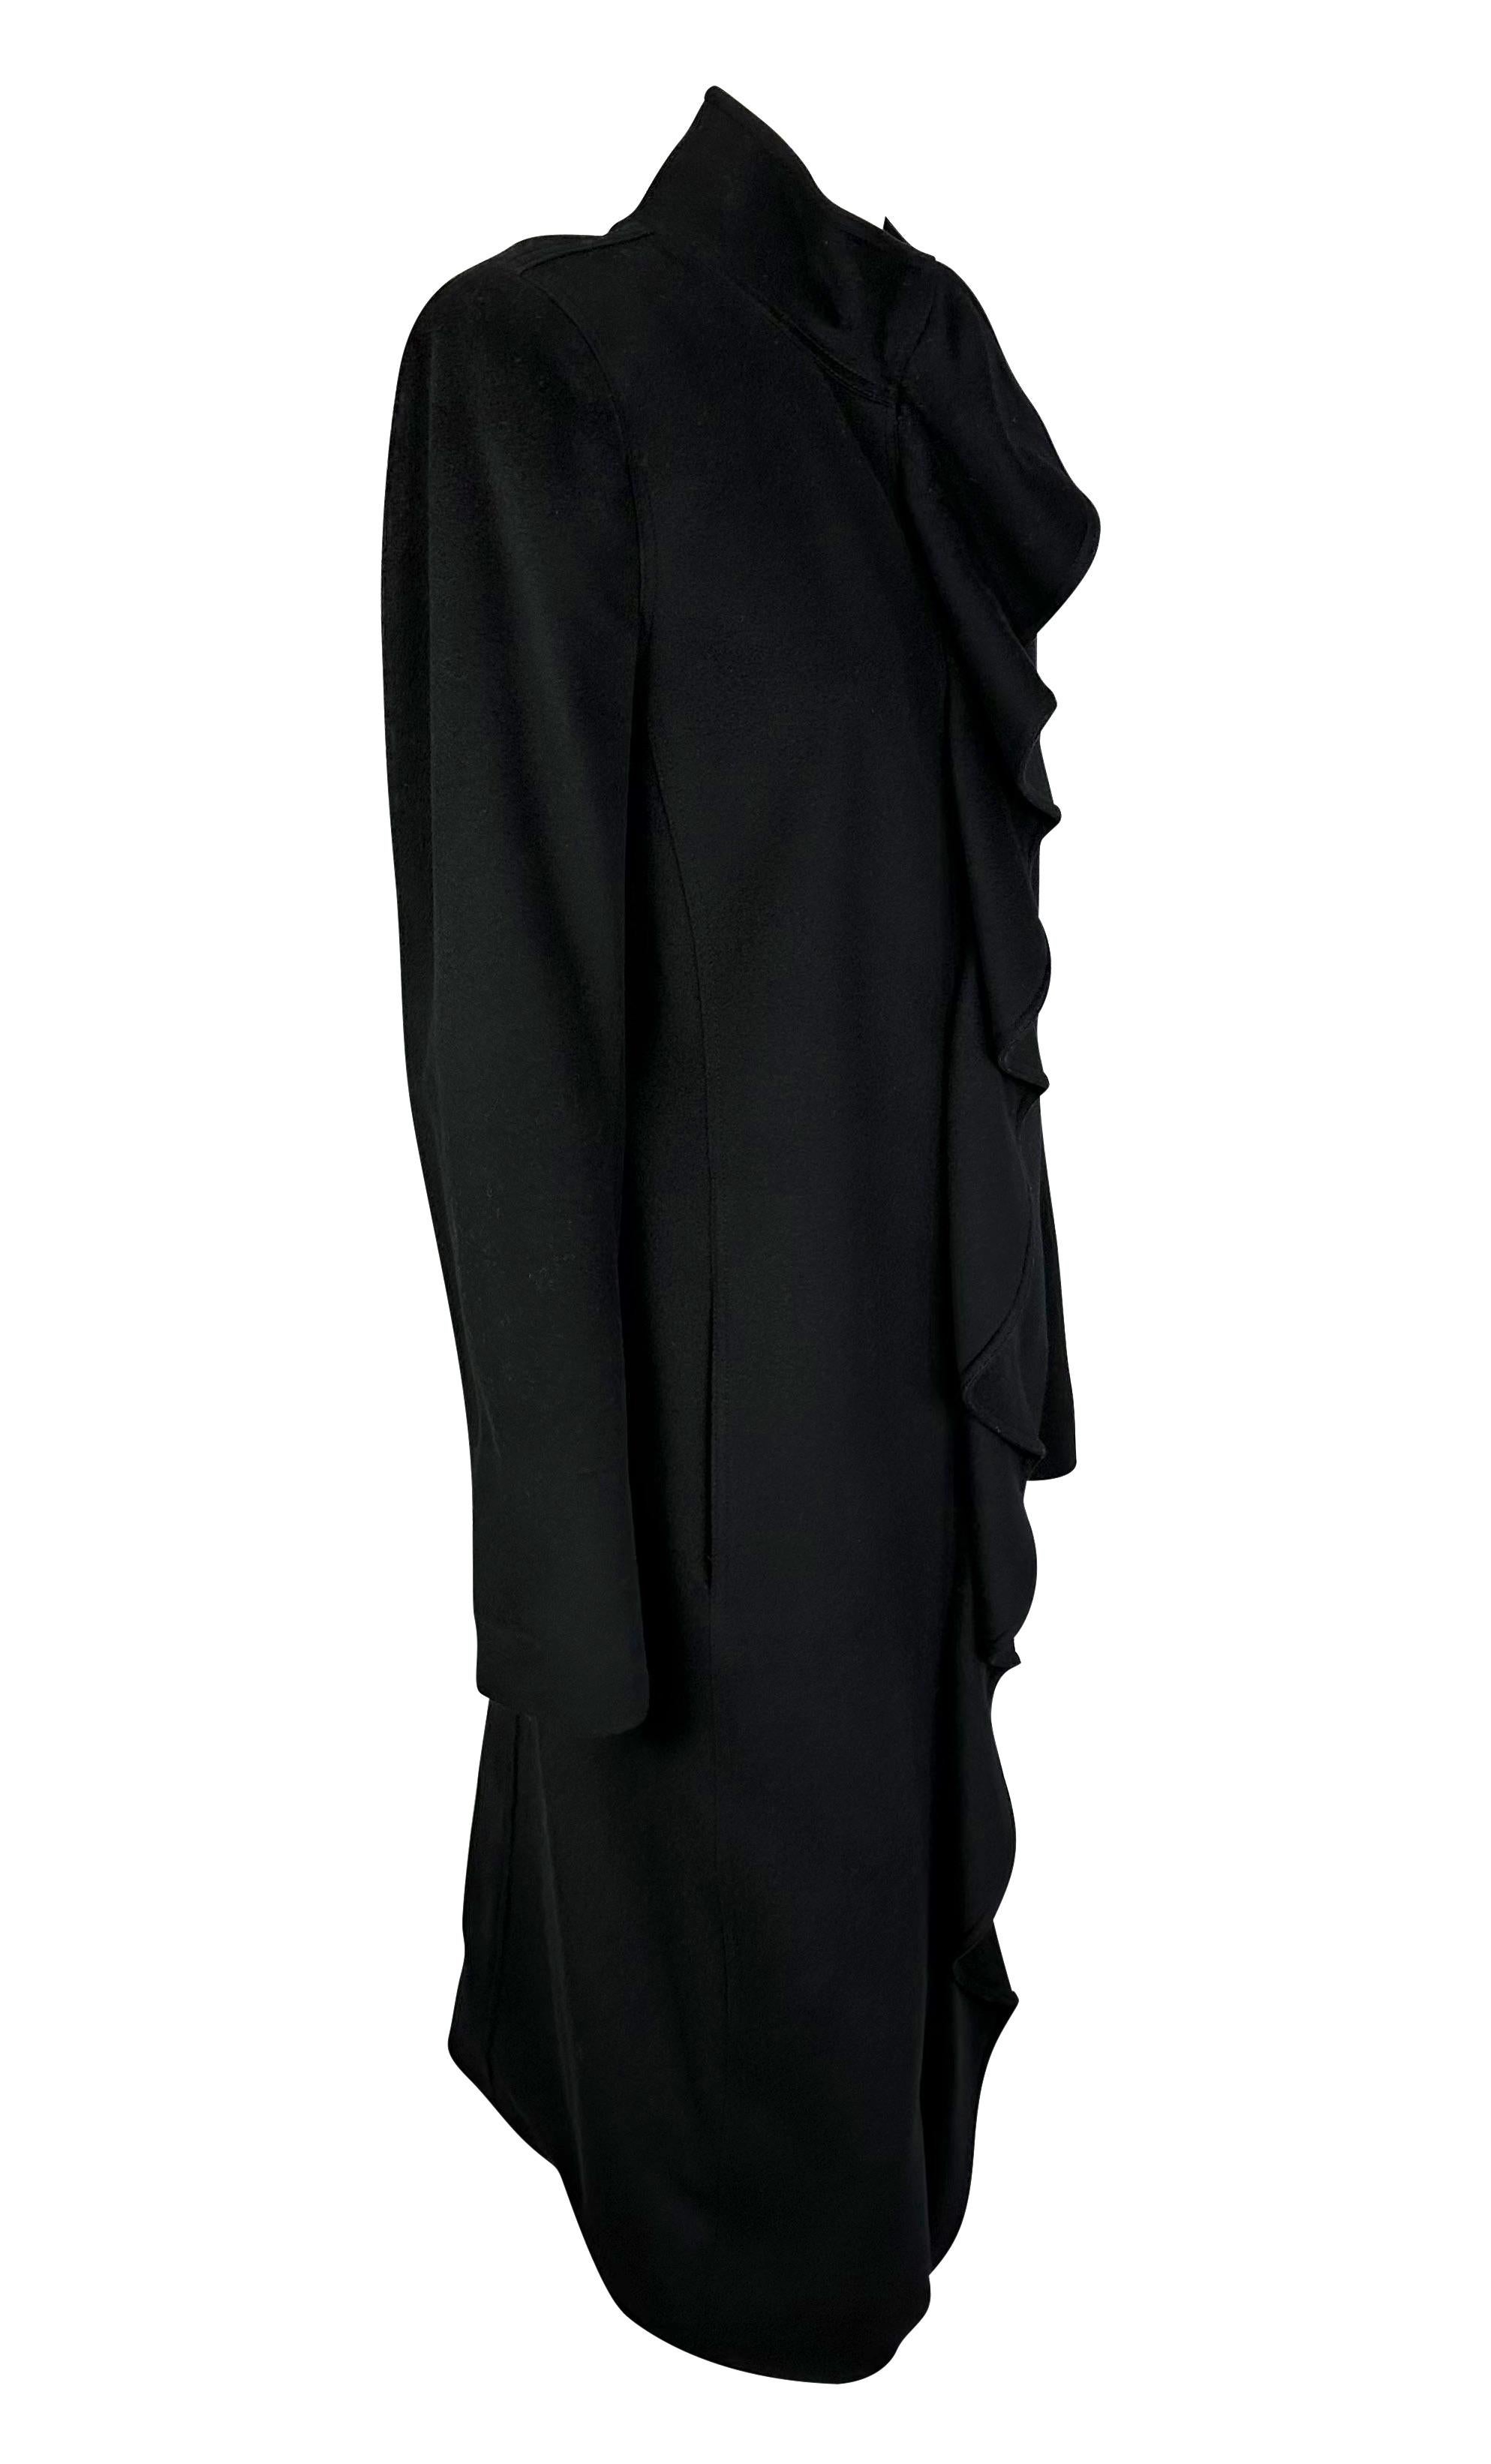 F/W 2003 Yves Saint Laurent by Tom Ford Runway Ruffle Overcoat Black For Sale 4